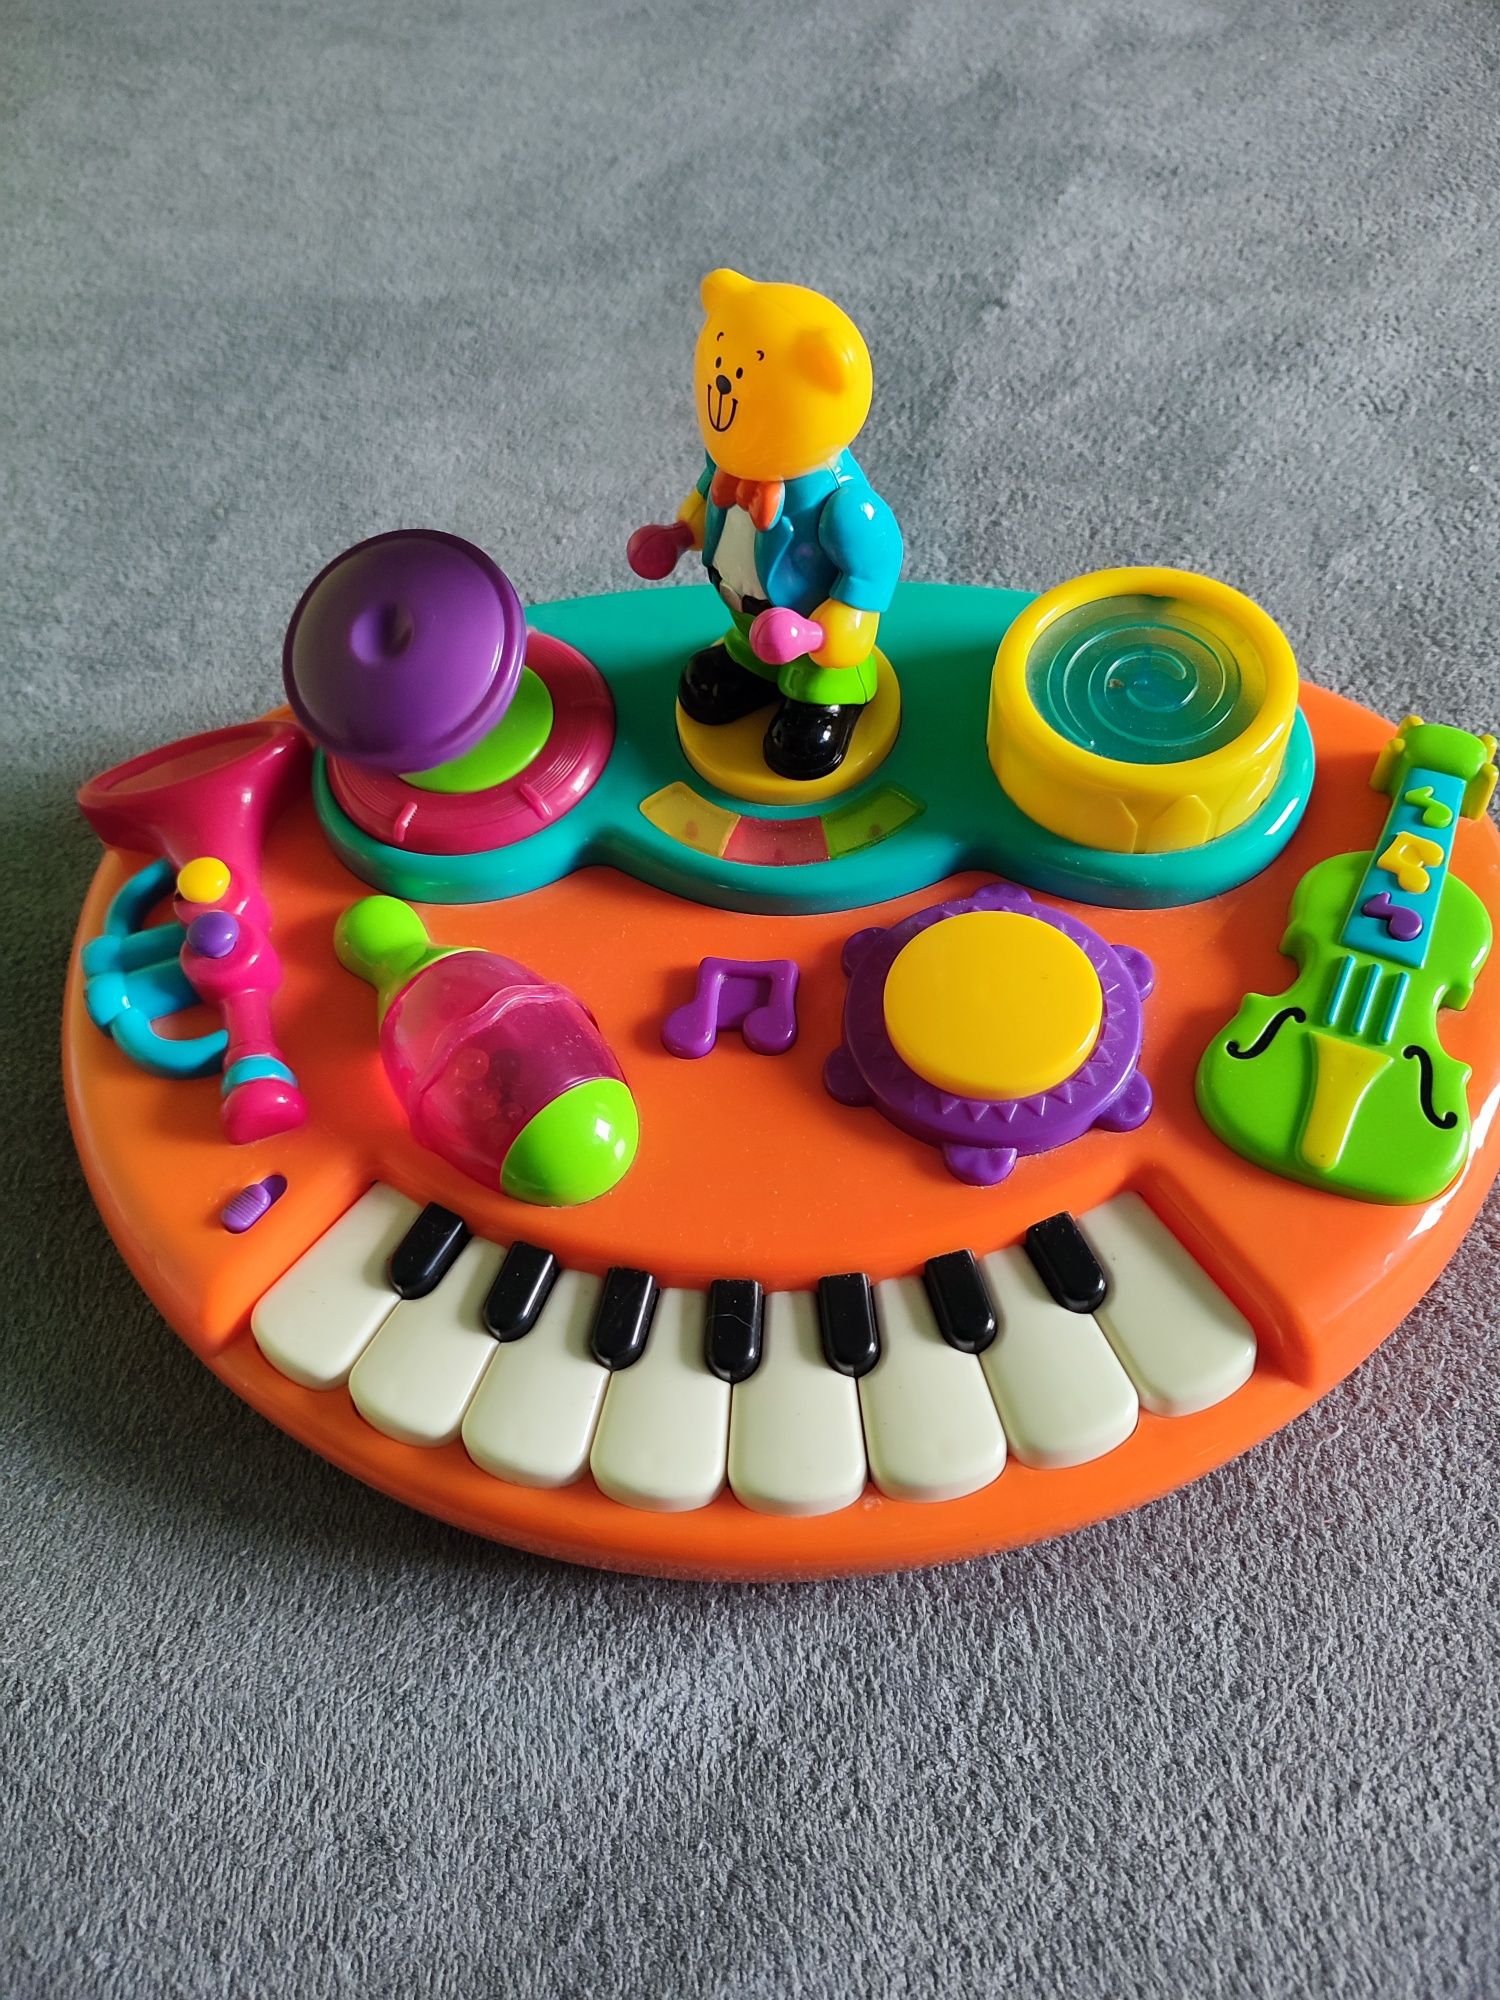 Zabawka pianinko interaktywna.